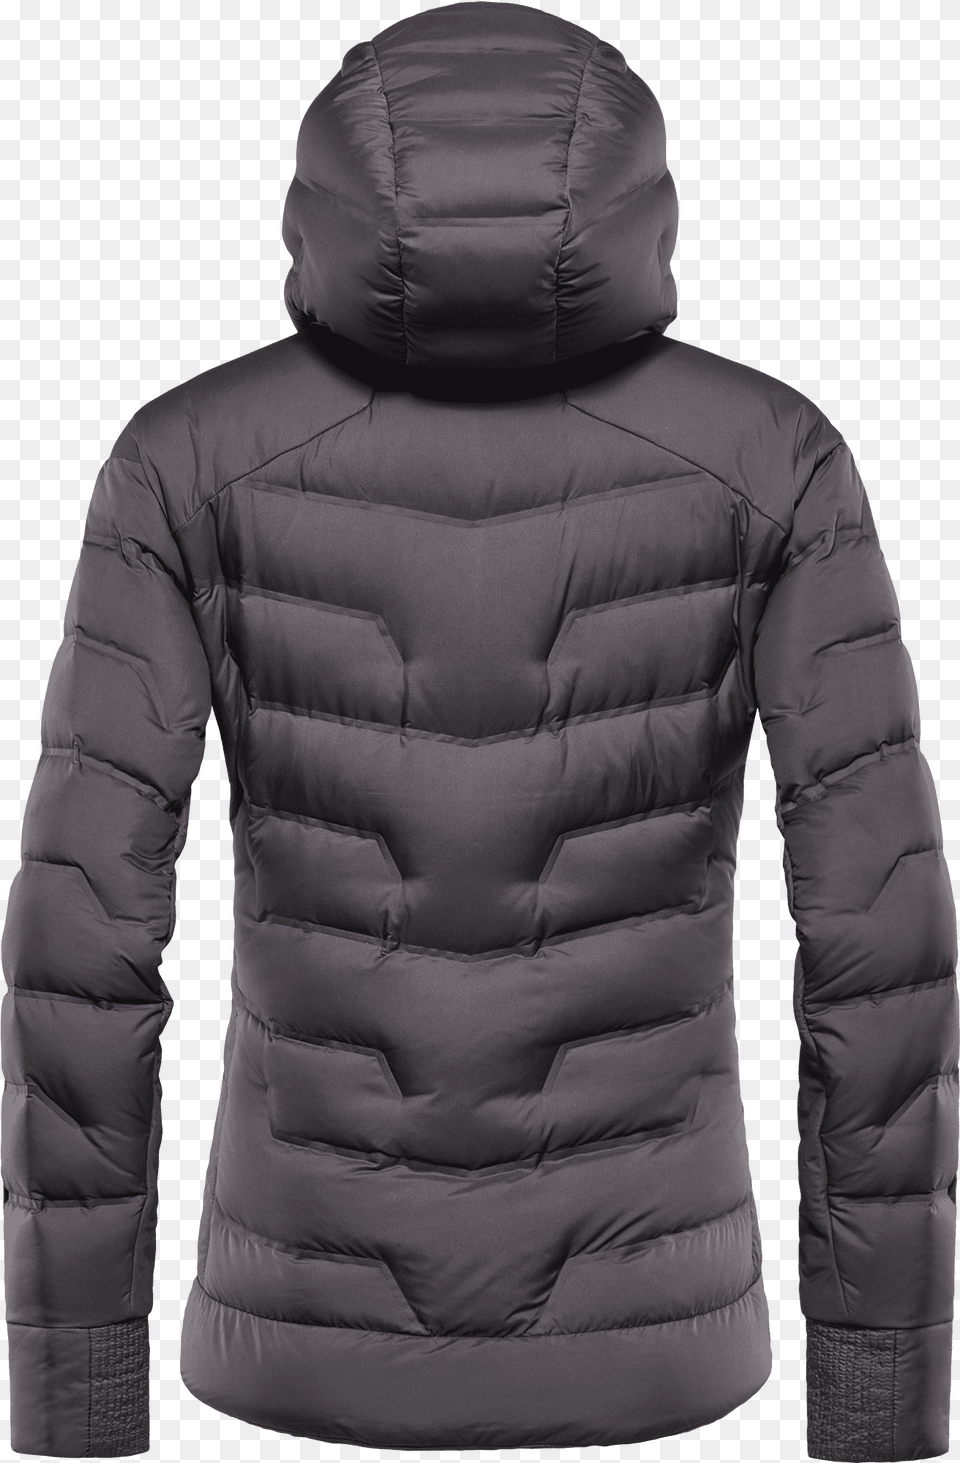 Mocho Jacket Hooded, Clothing, Coat, Hood Png Image